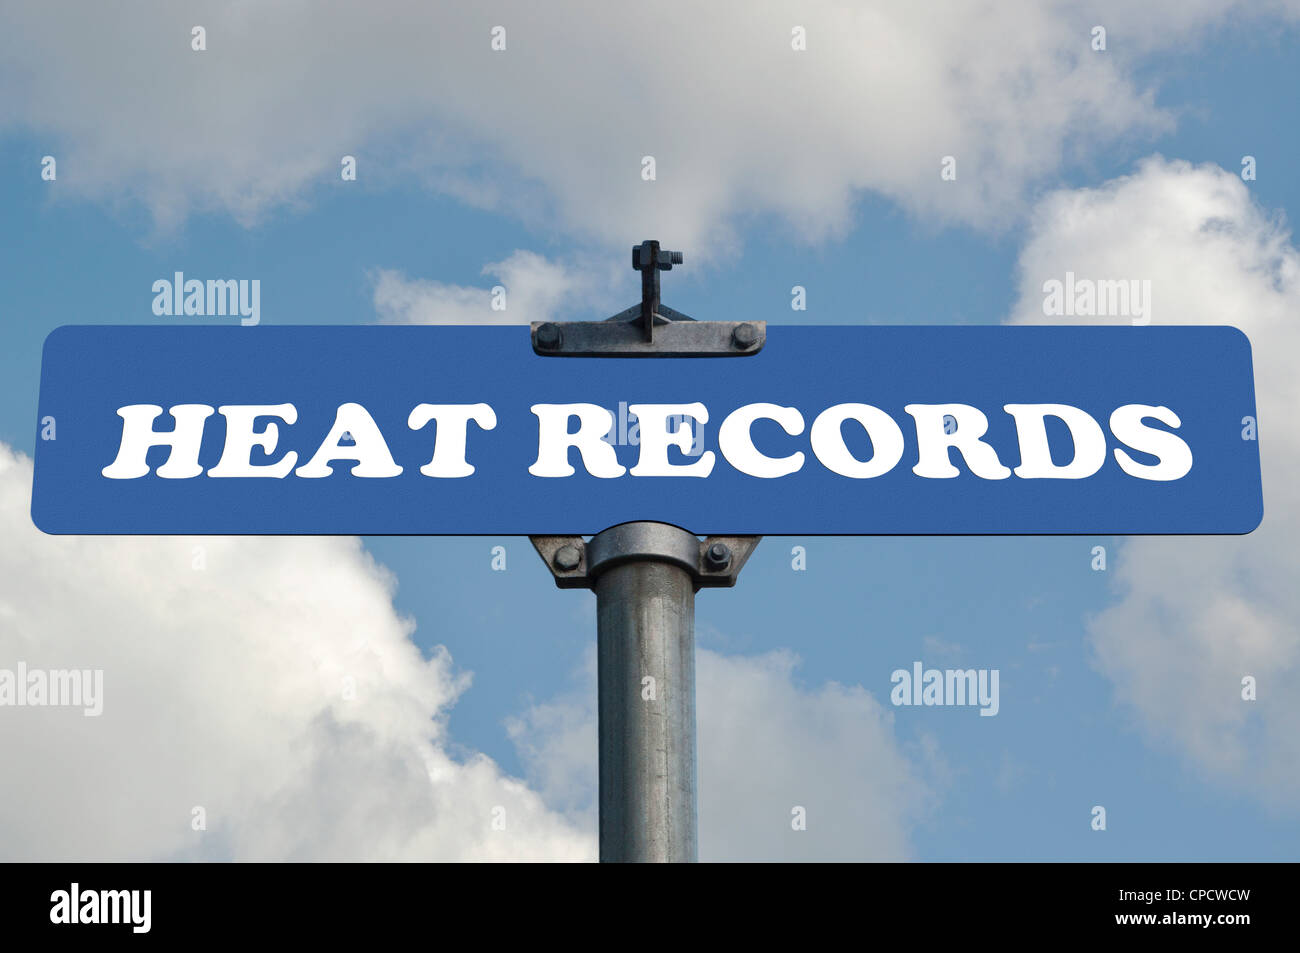 Heat records road sign Stock Photo